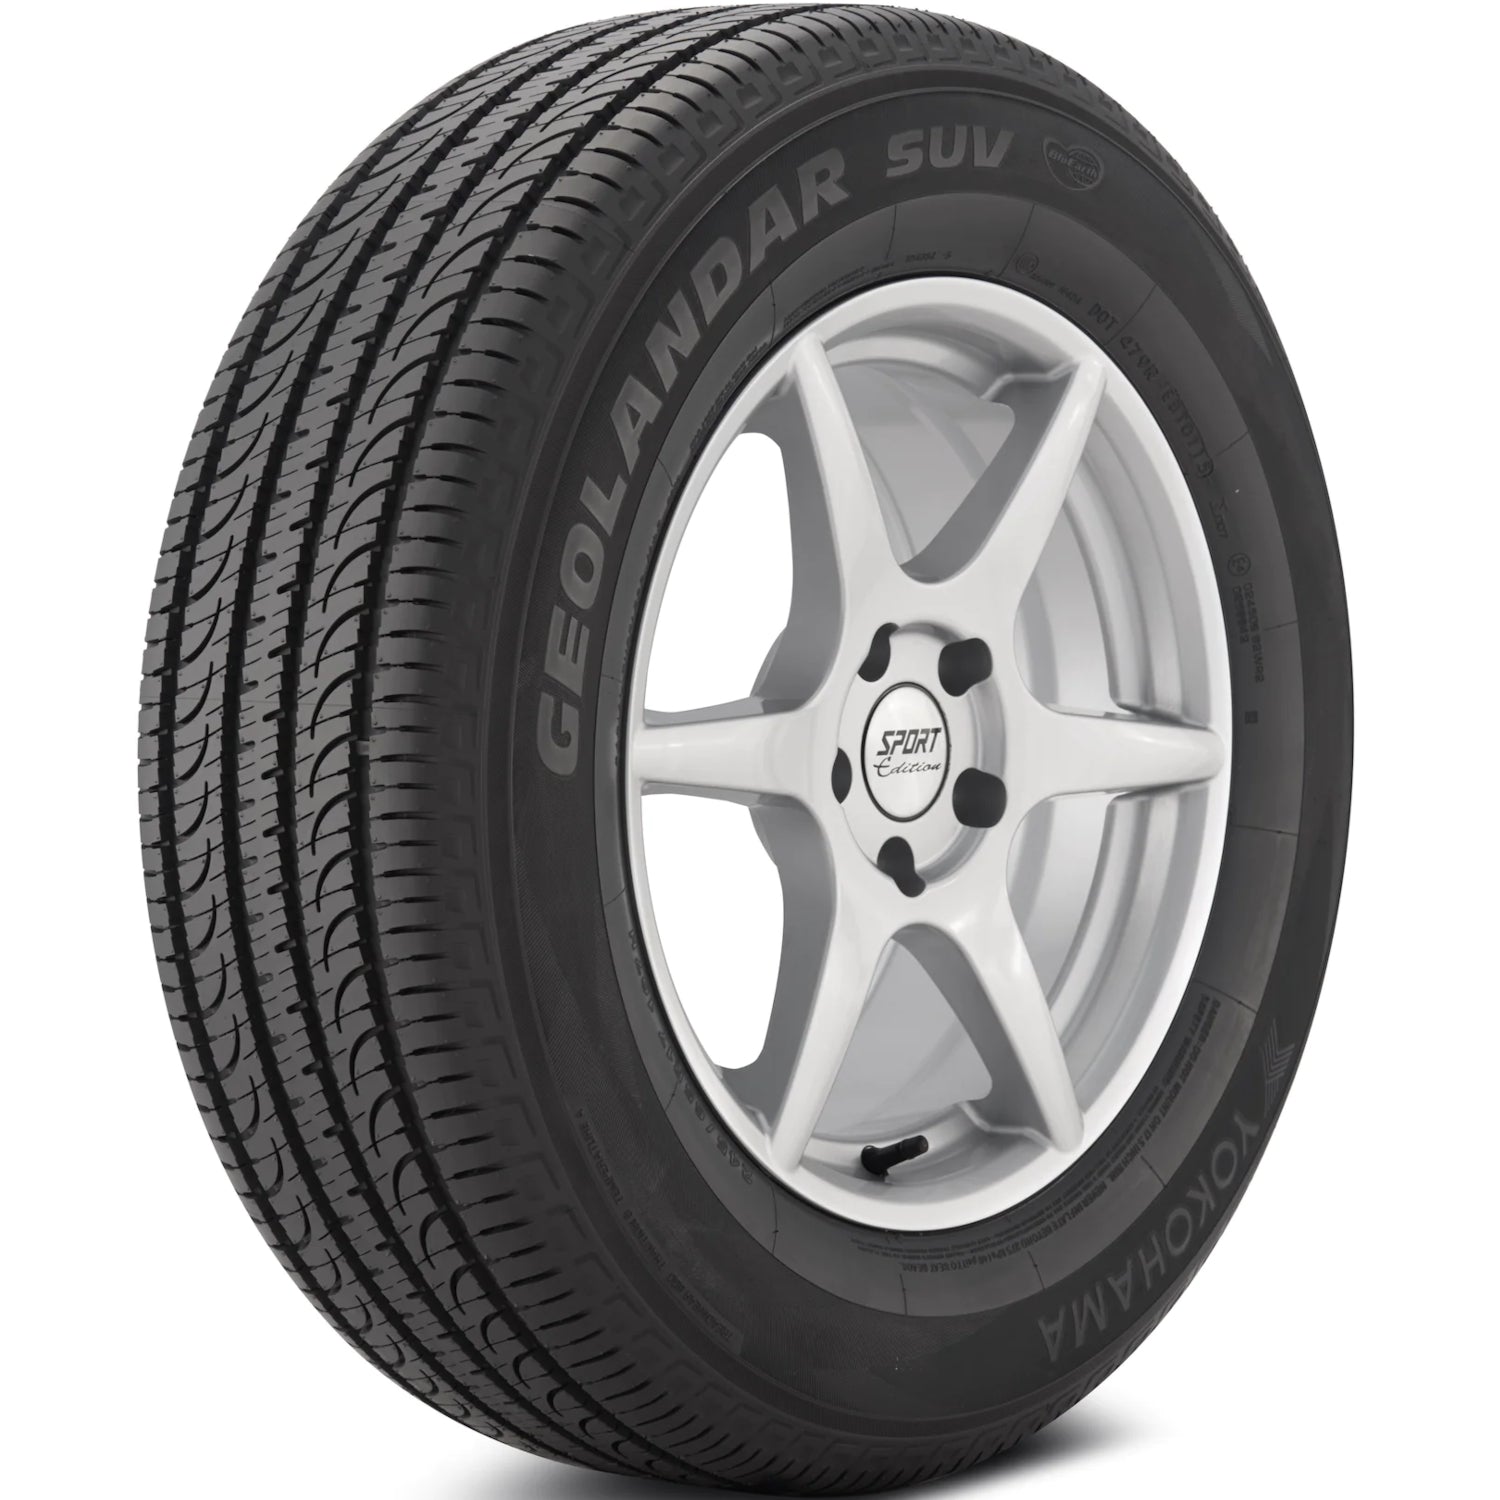 YOKOHAMA GEOLANDAR G055 225/55R18 (27.8X8.9R 18) Tires